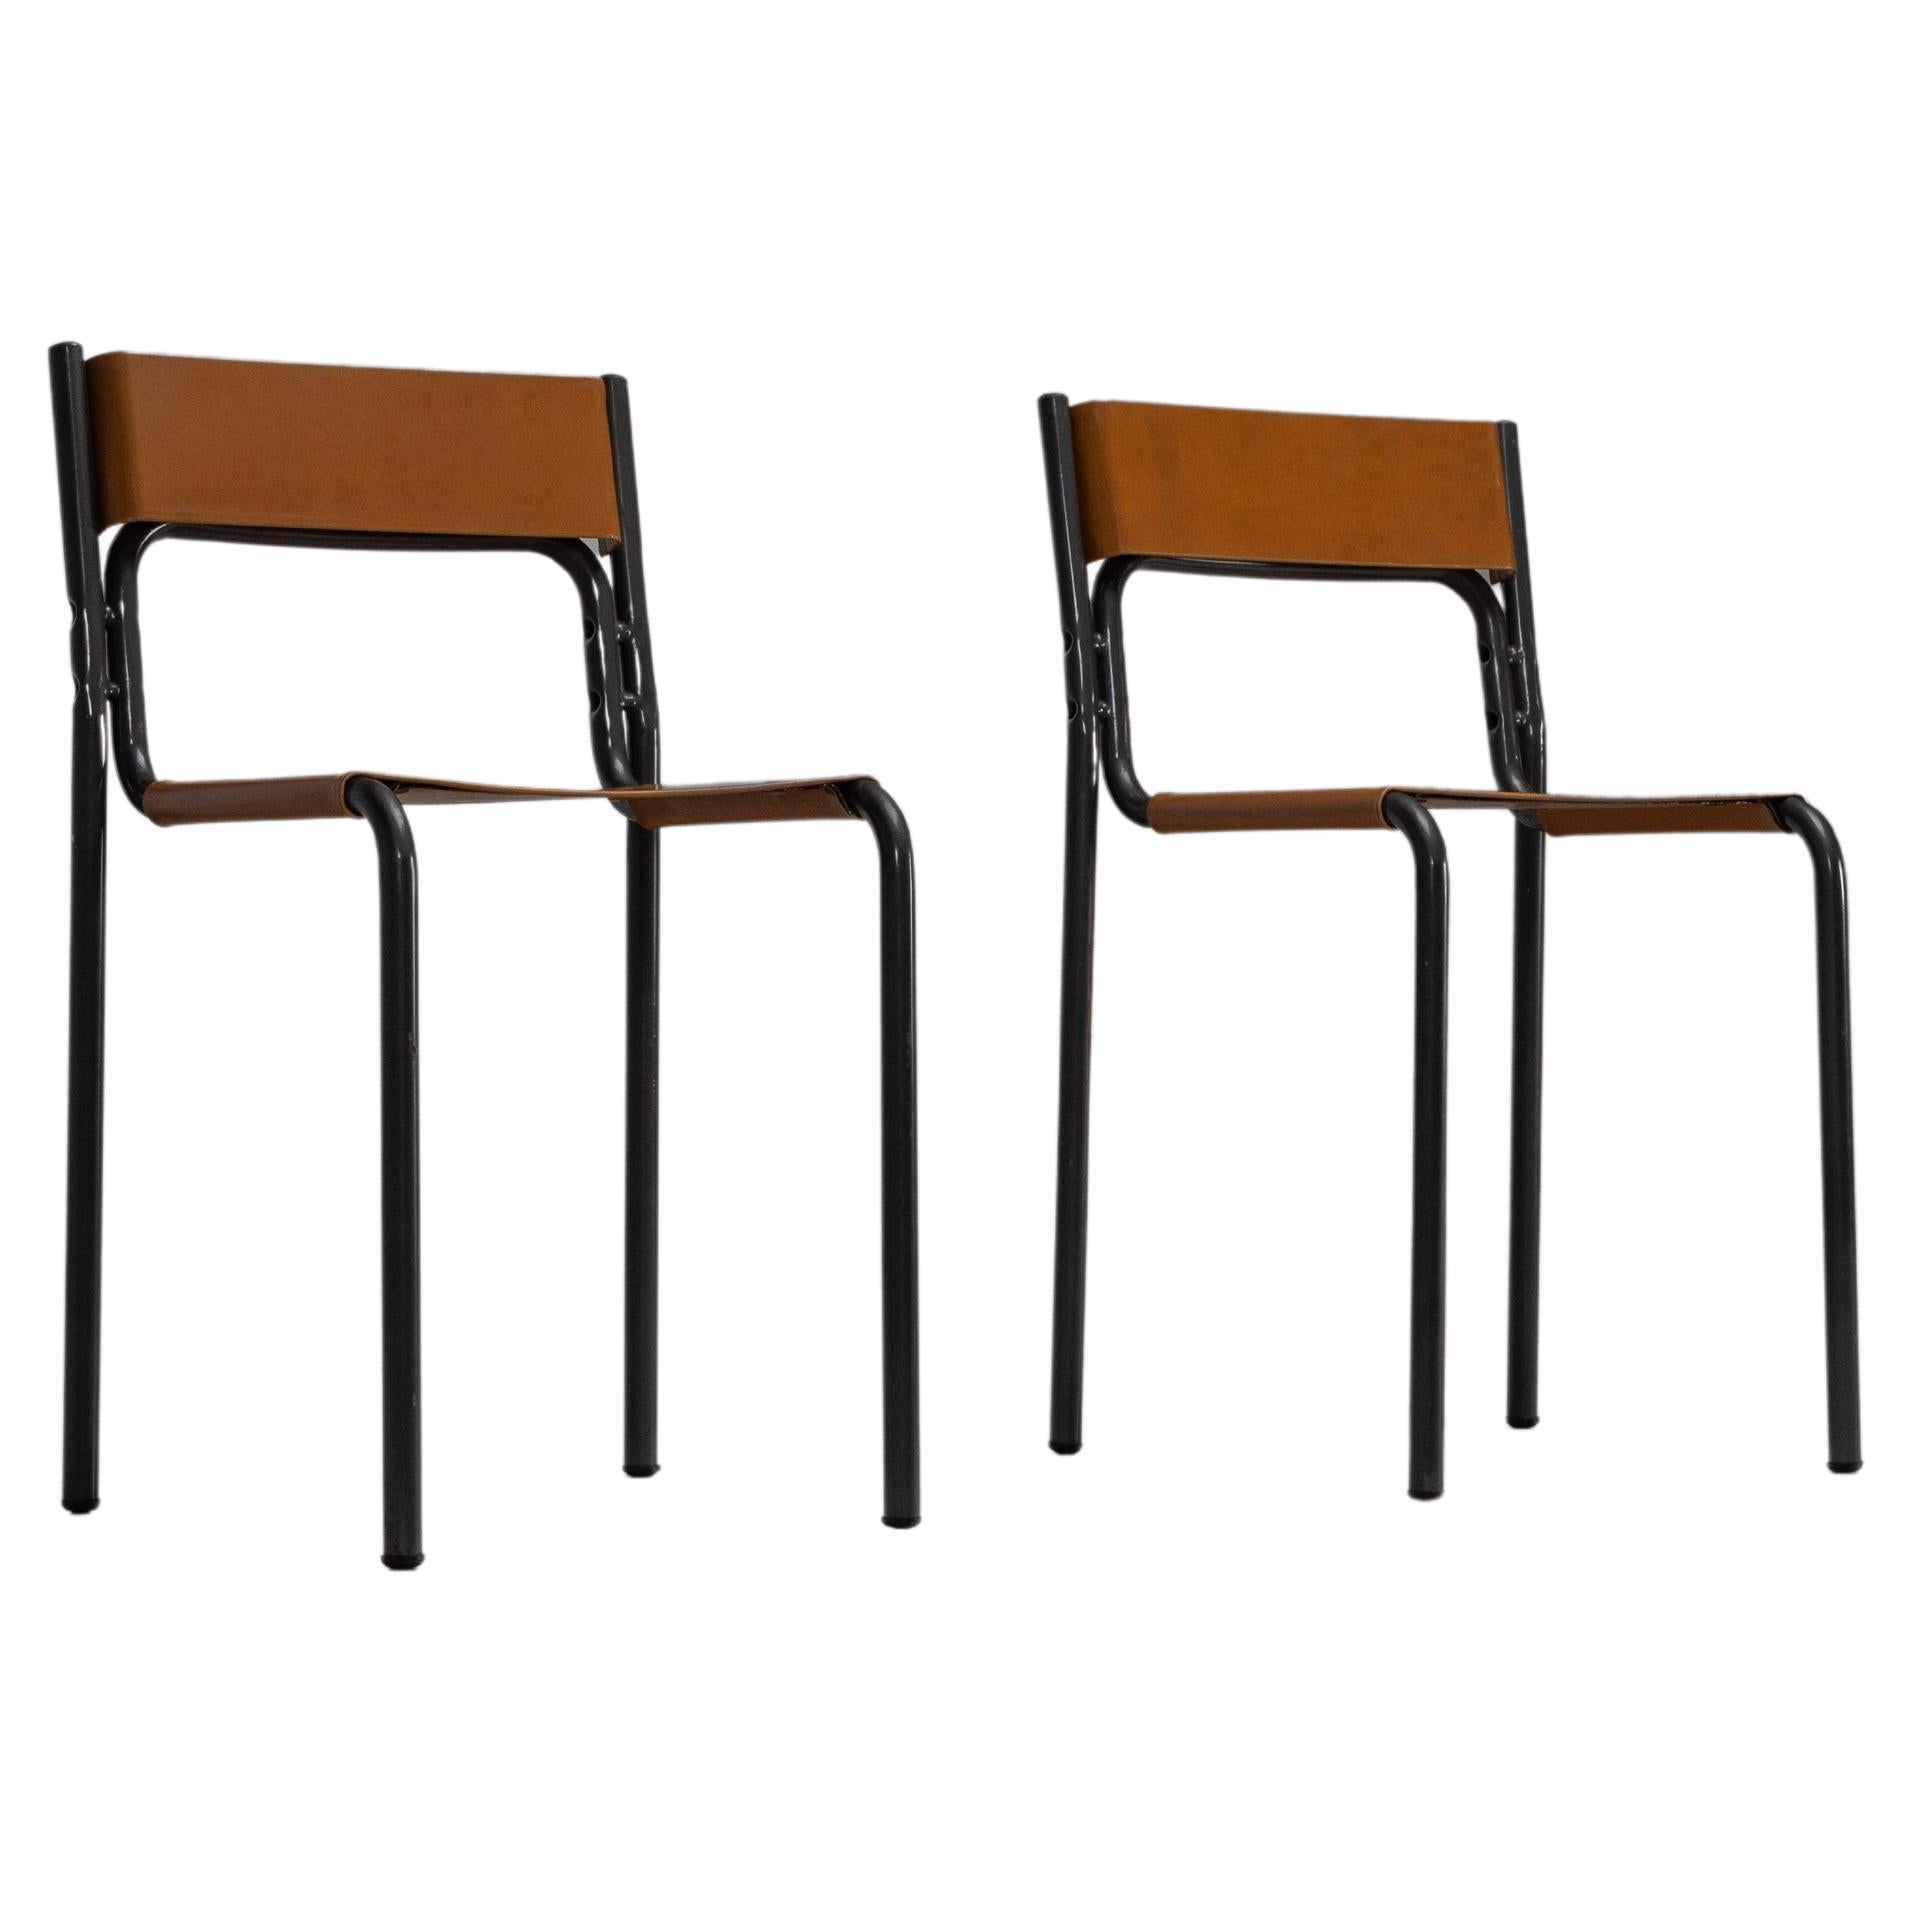 Pier Giacomo Castiglioni Azucena chairs made in Italy 1959